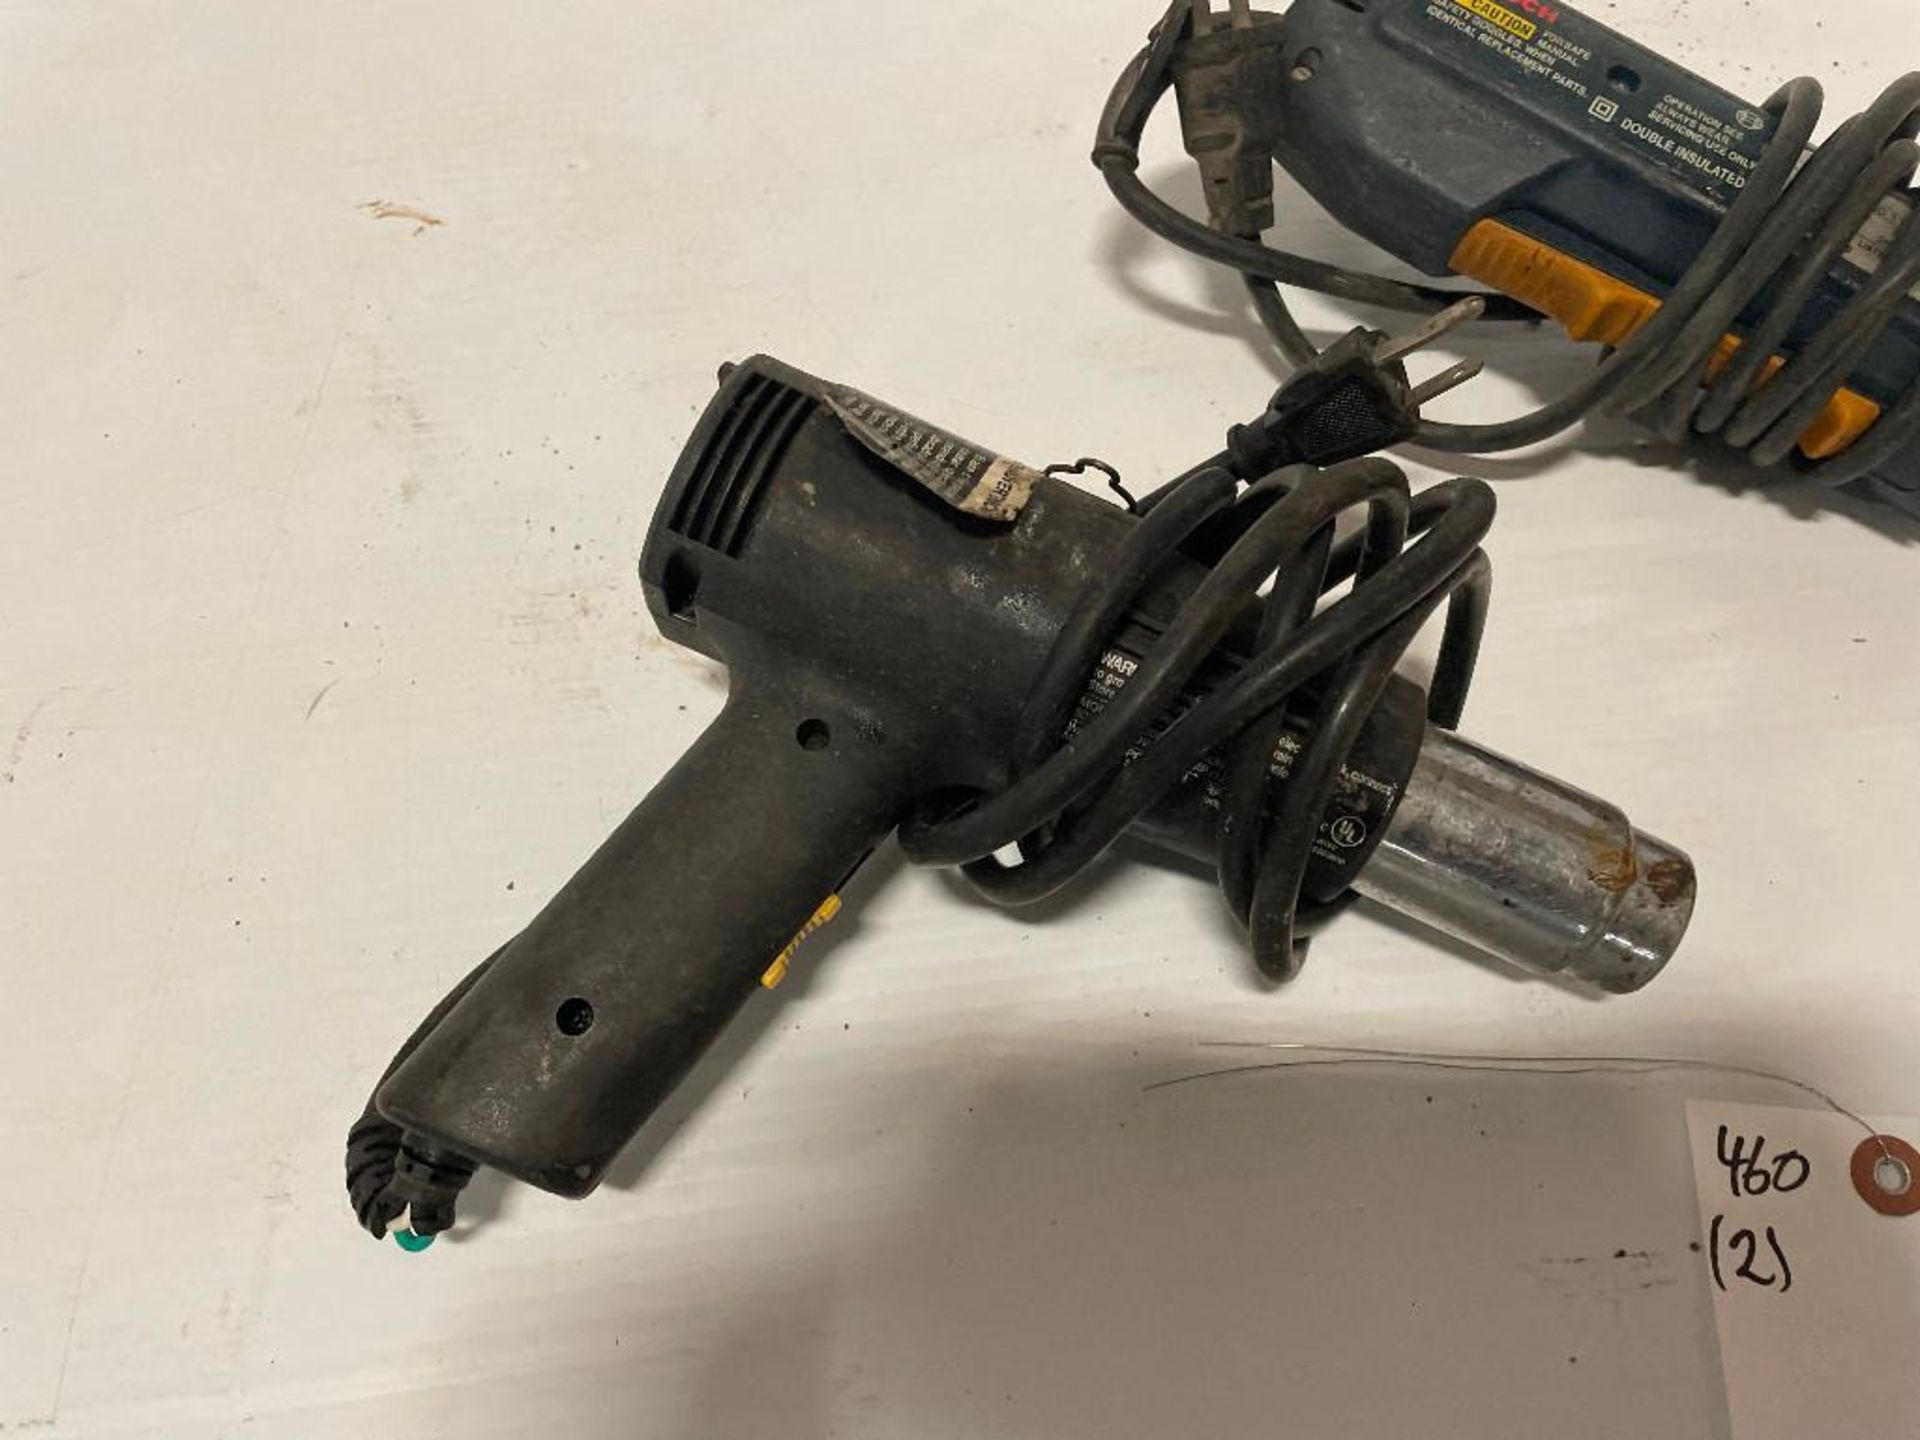 Bosh 1132VSR Angle Drill & Wagner Heat Gun. Located in Hazelwood, MO - Image 2 of 5